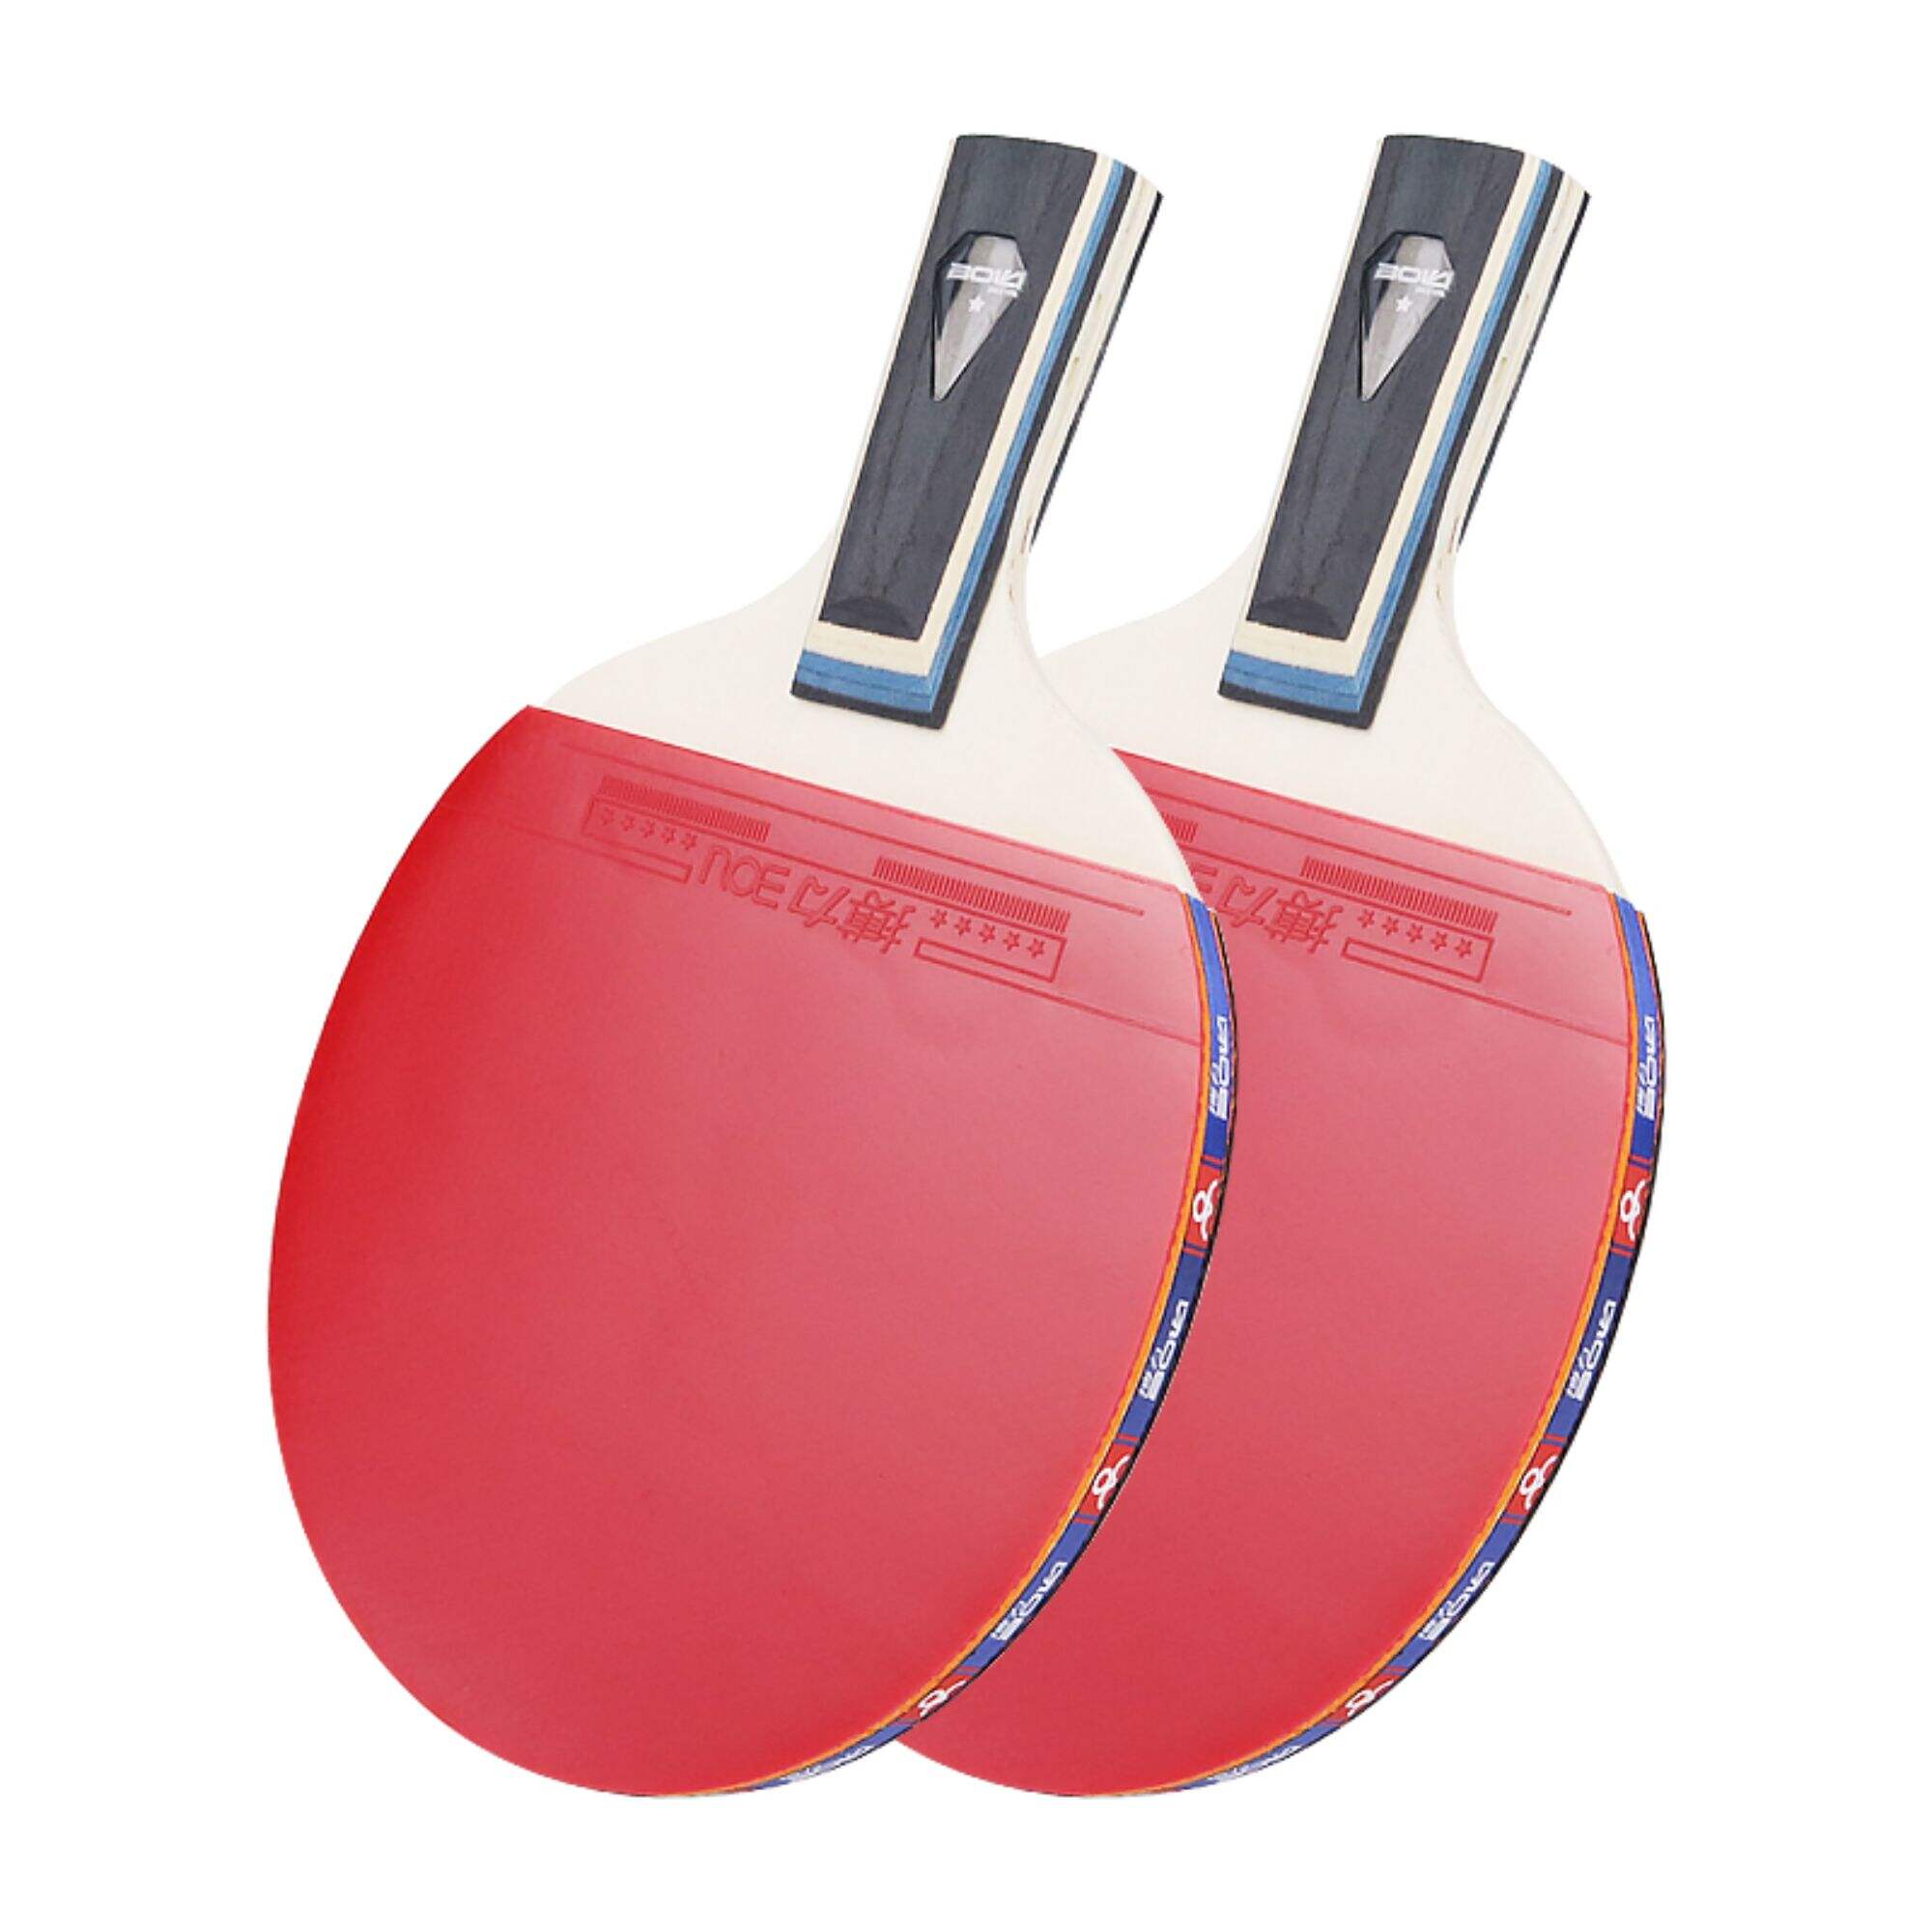 Boli 1star Professional Table Tennis Rakcet/Bat/Paddle